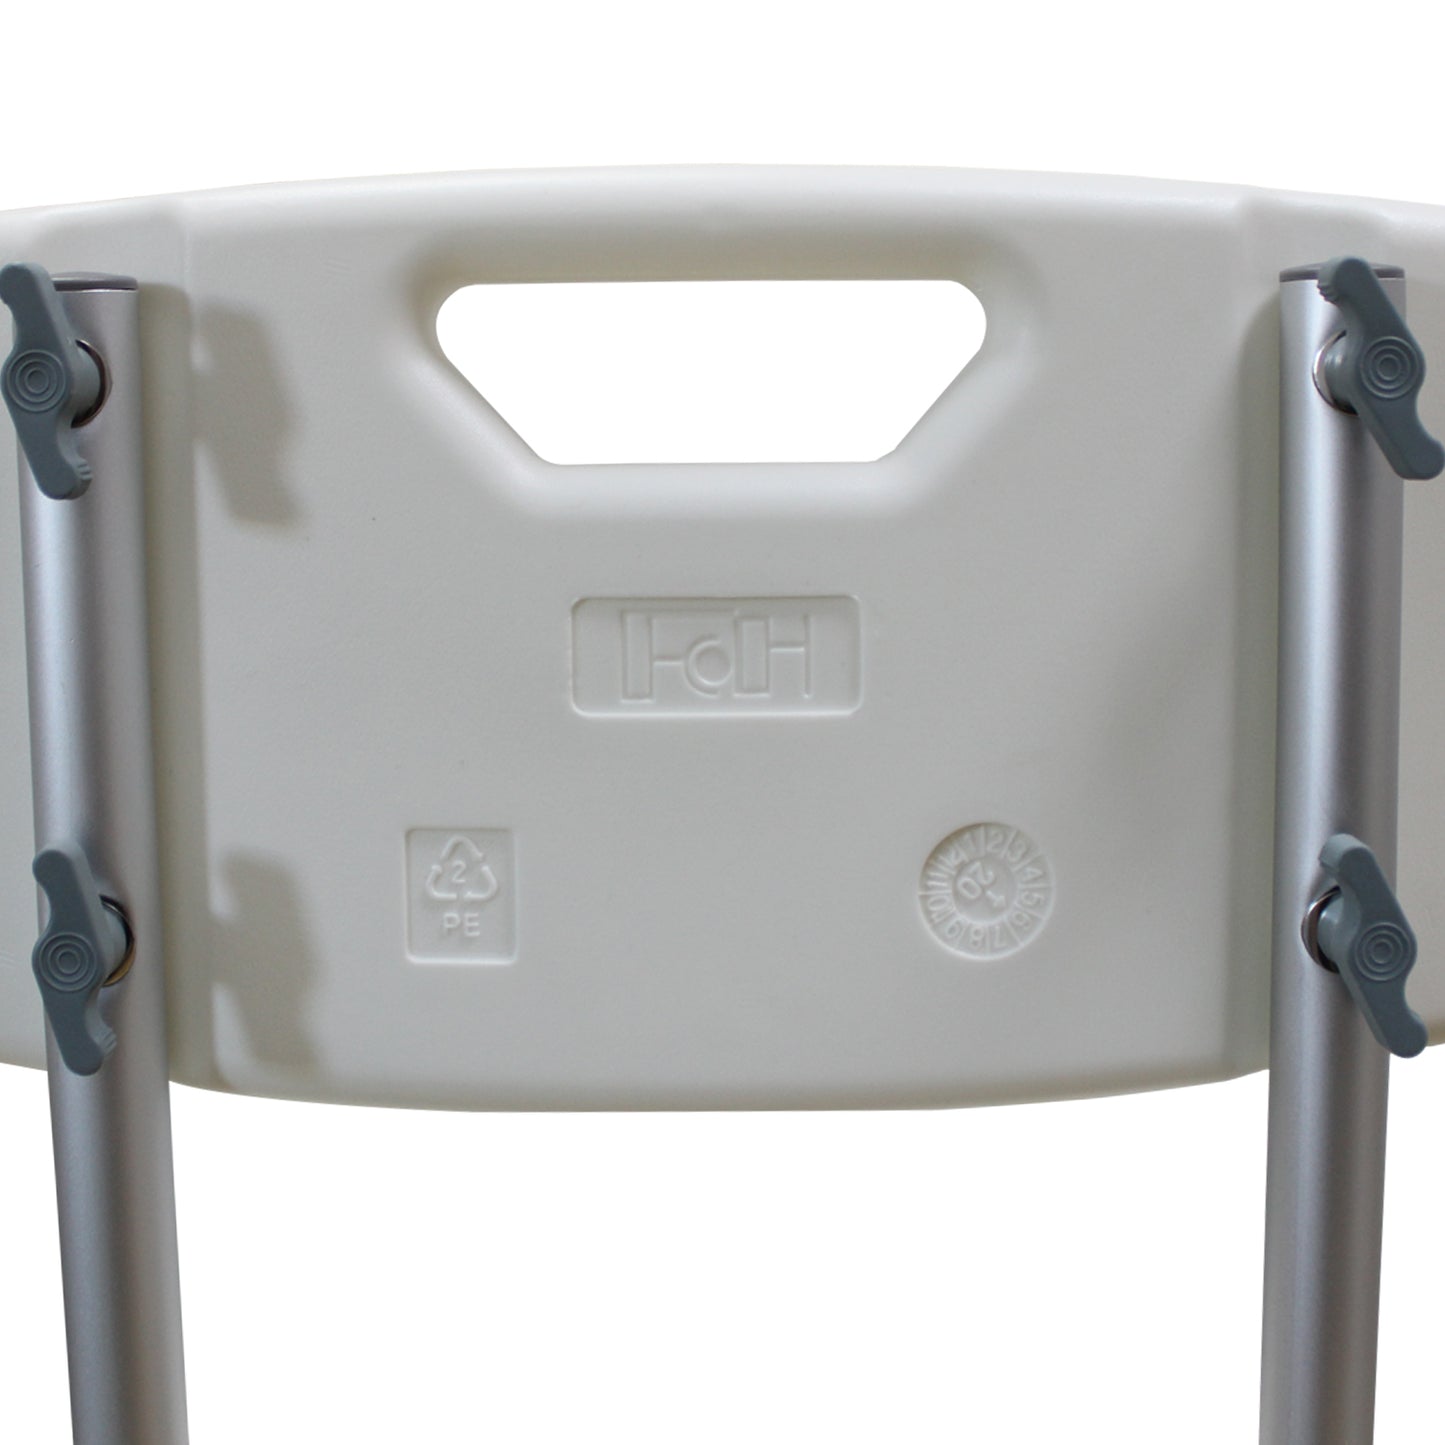 Bathroom Safety Chair - White